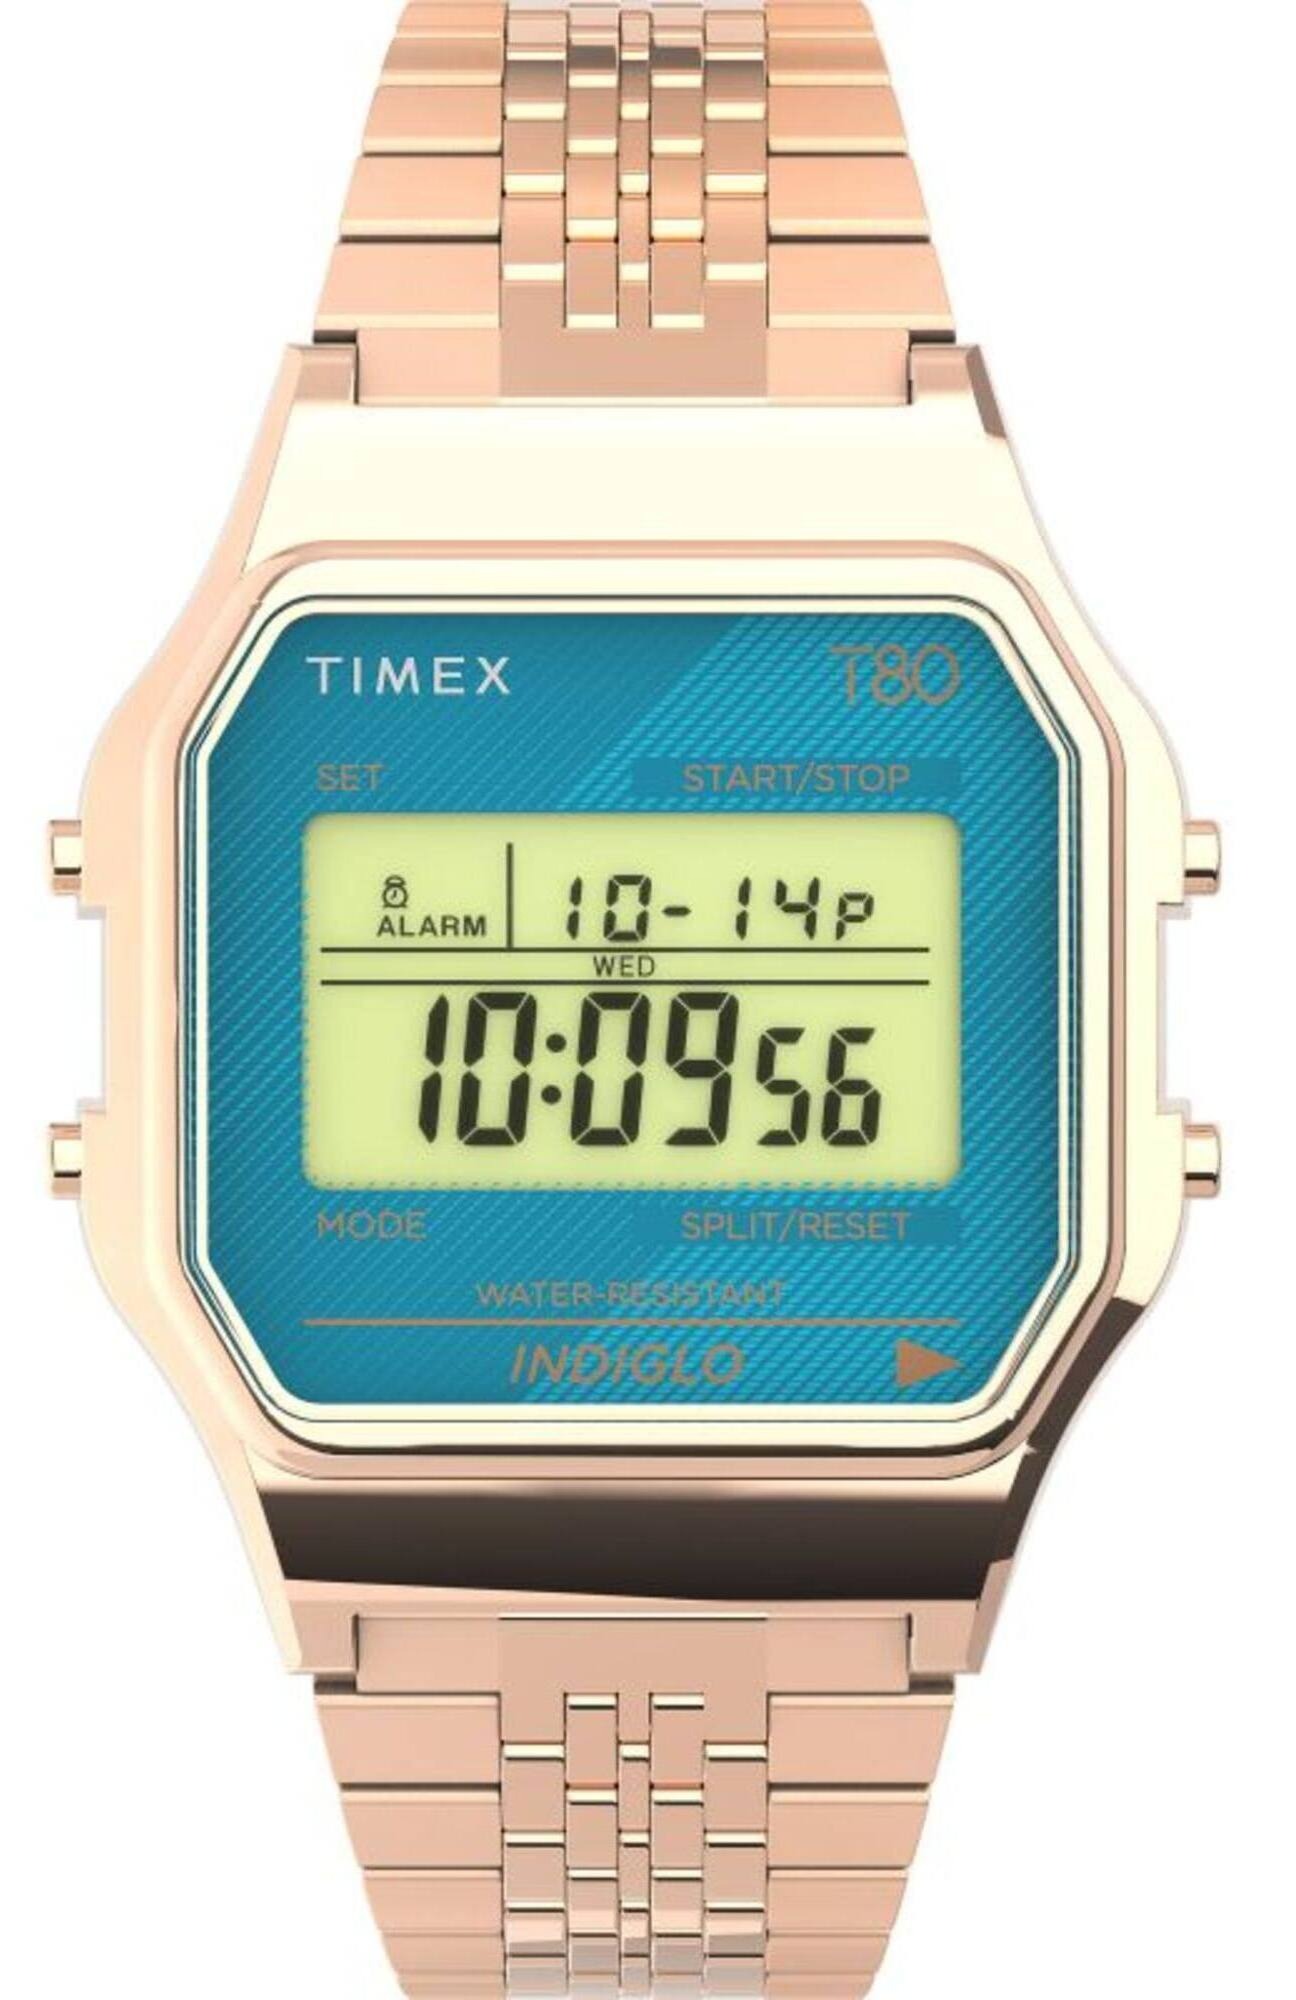 Timex Unisex Watch Blue Digital Dial Rose Gold Tone Bracelet $35